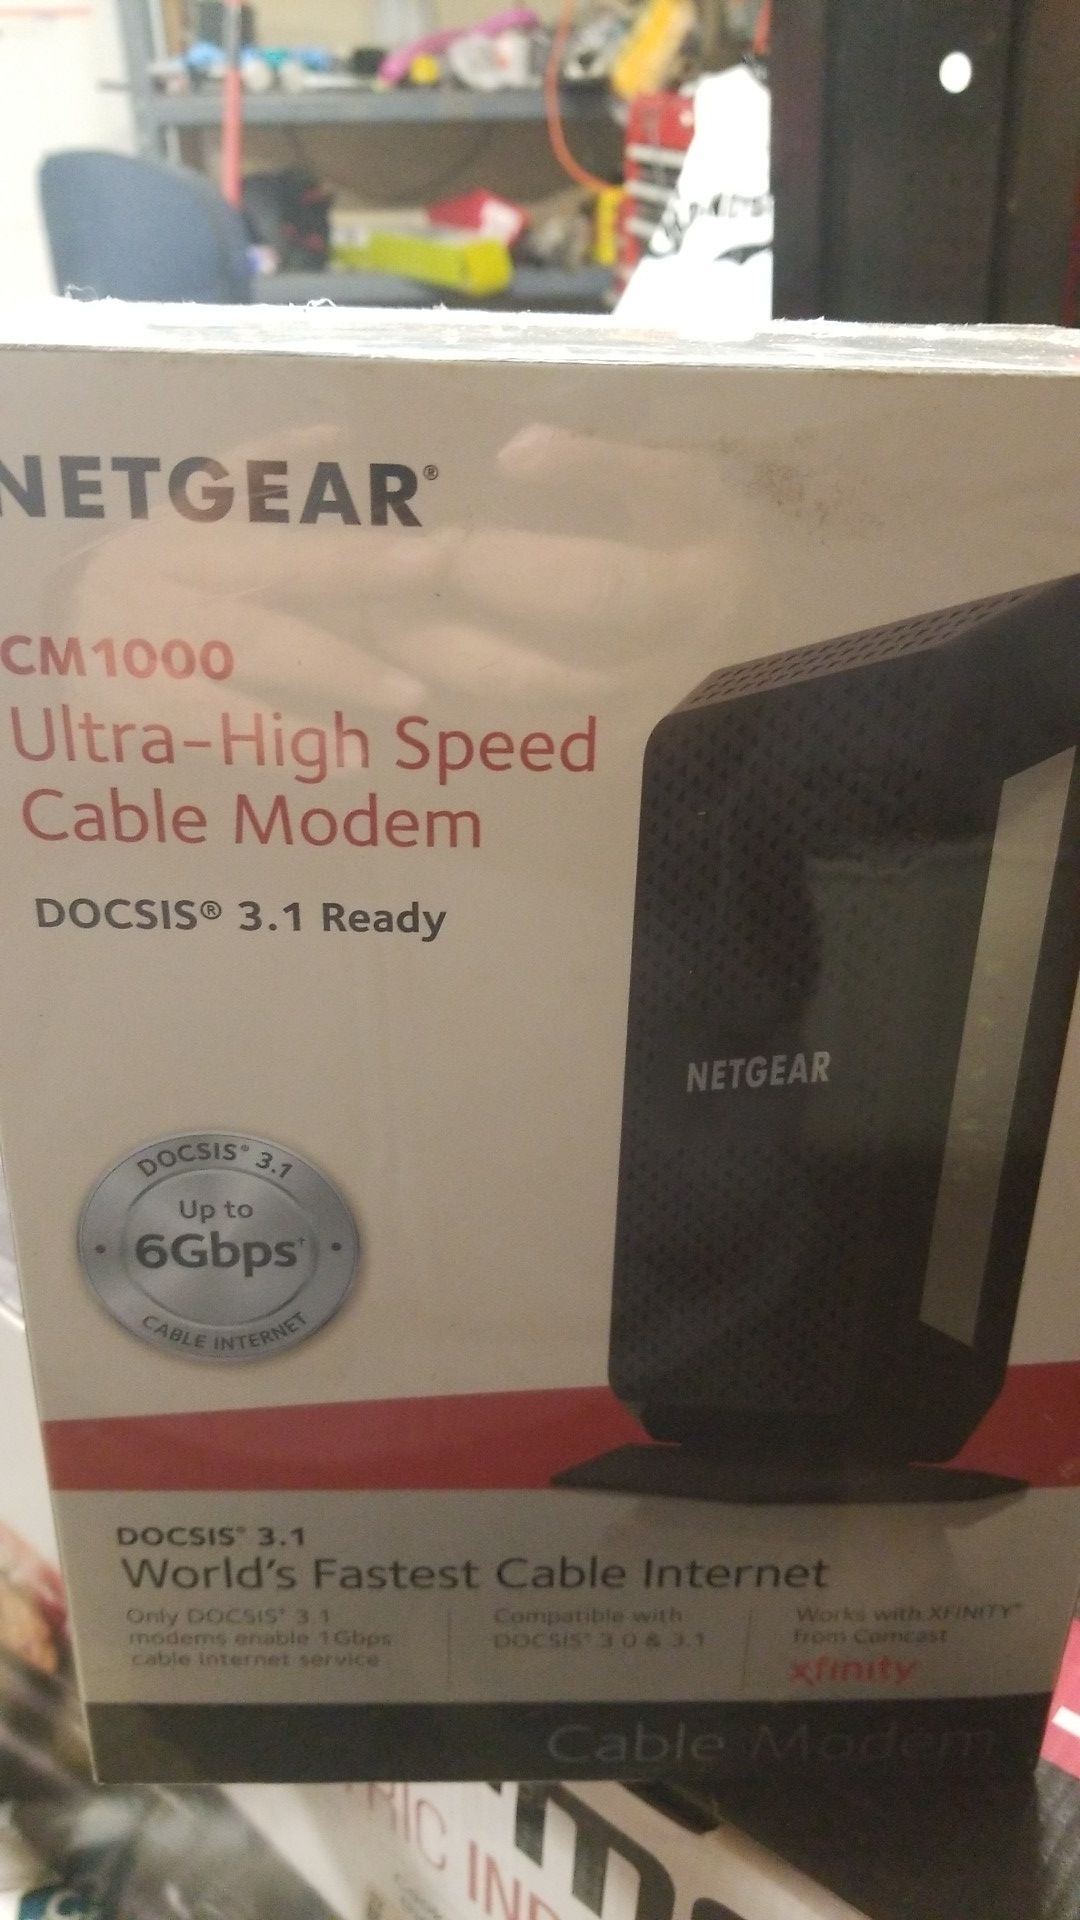 Brand new netgear cable modem